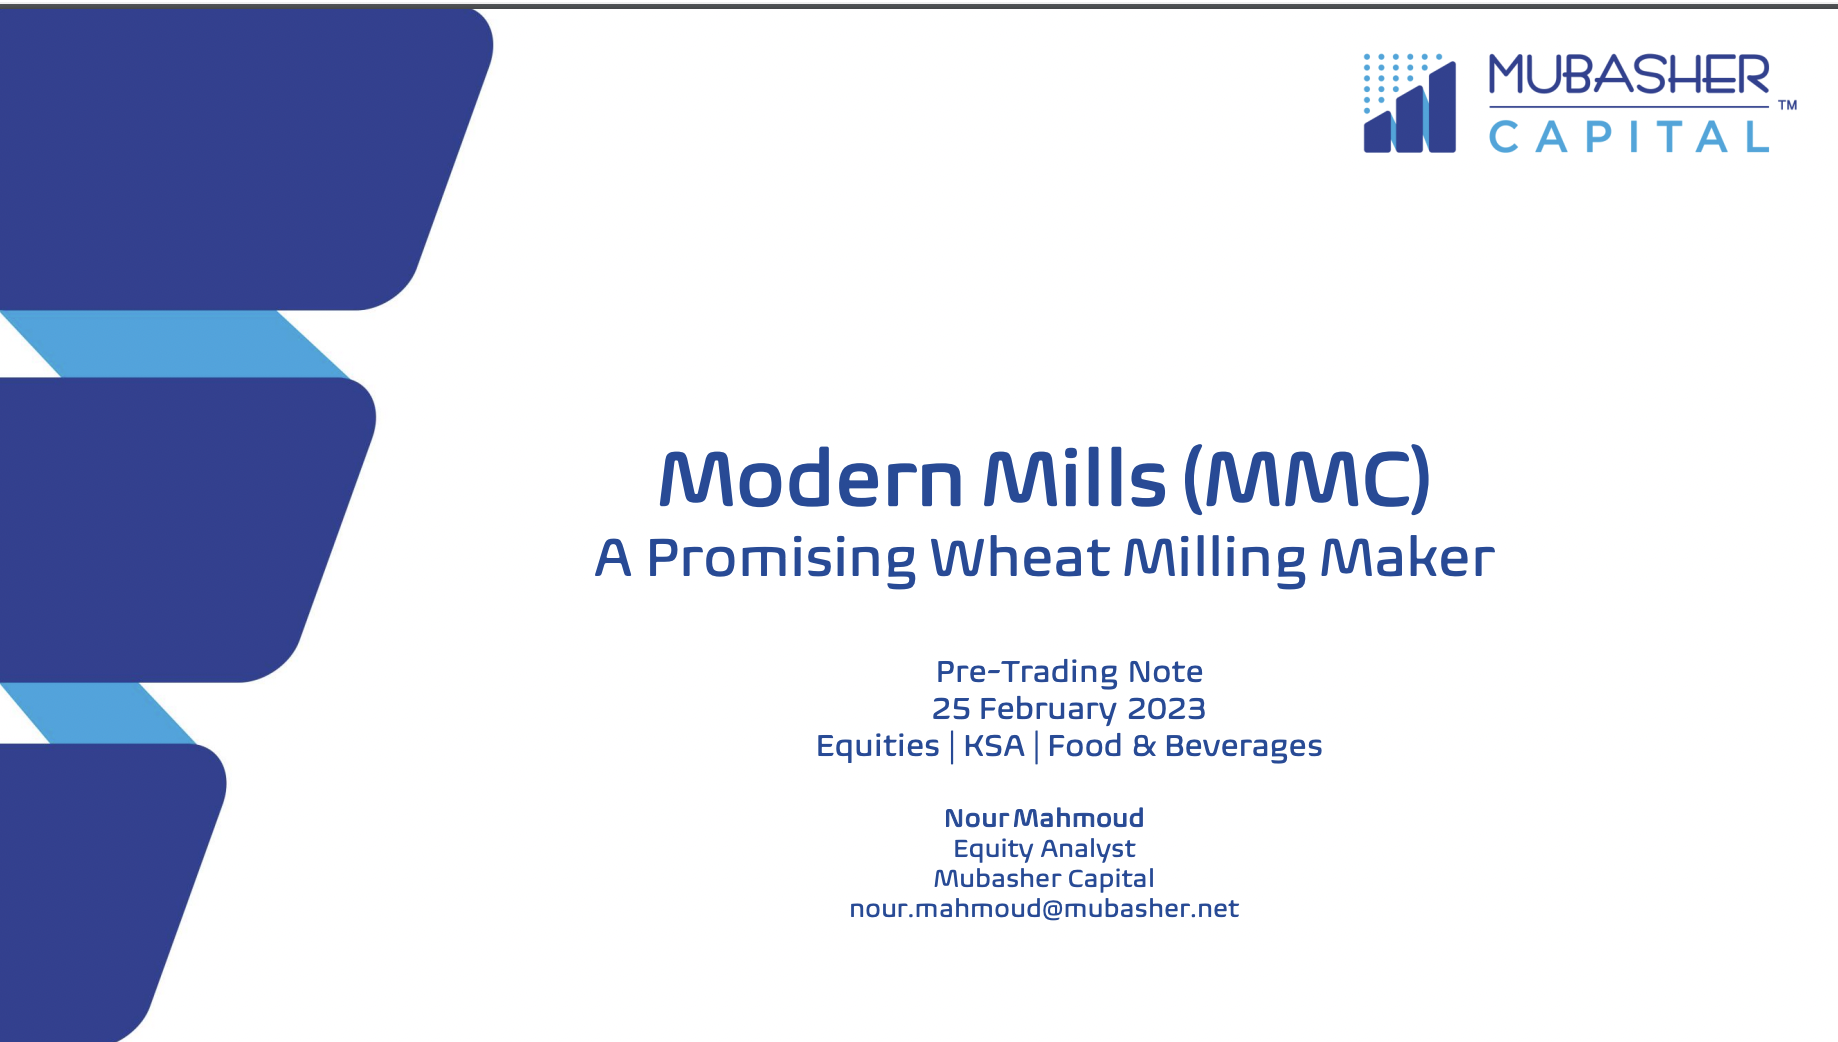 Modern Mills Company (MMC) Pre-Trading Report